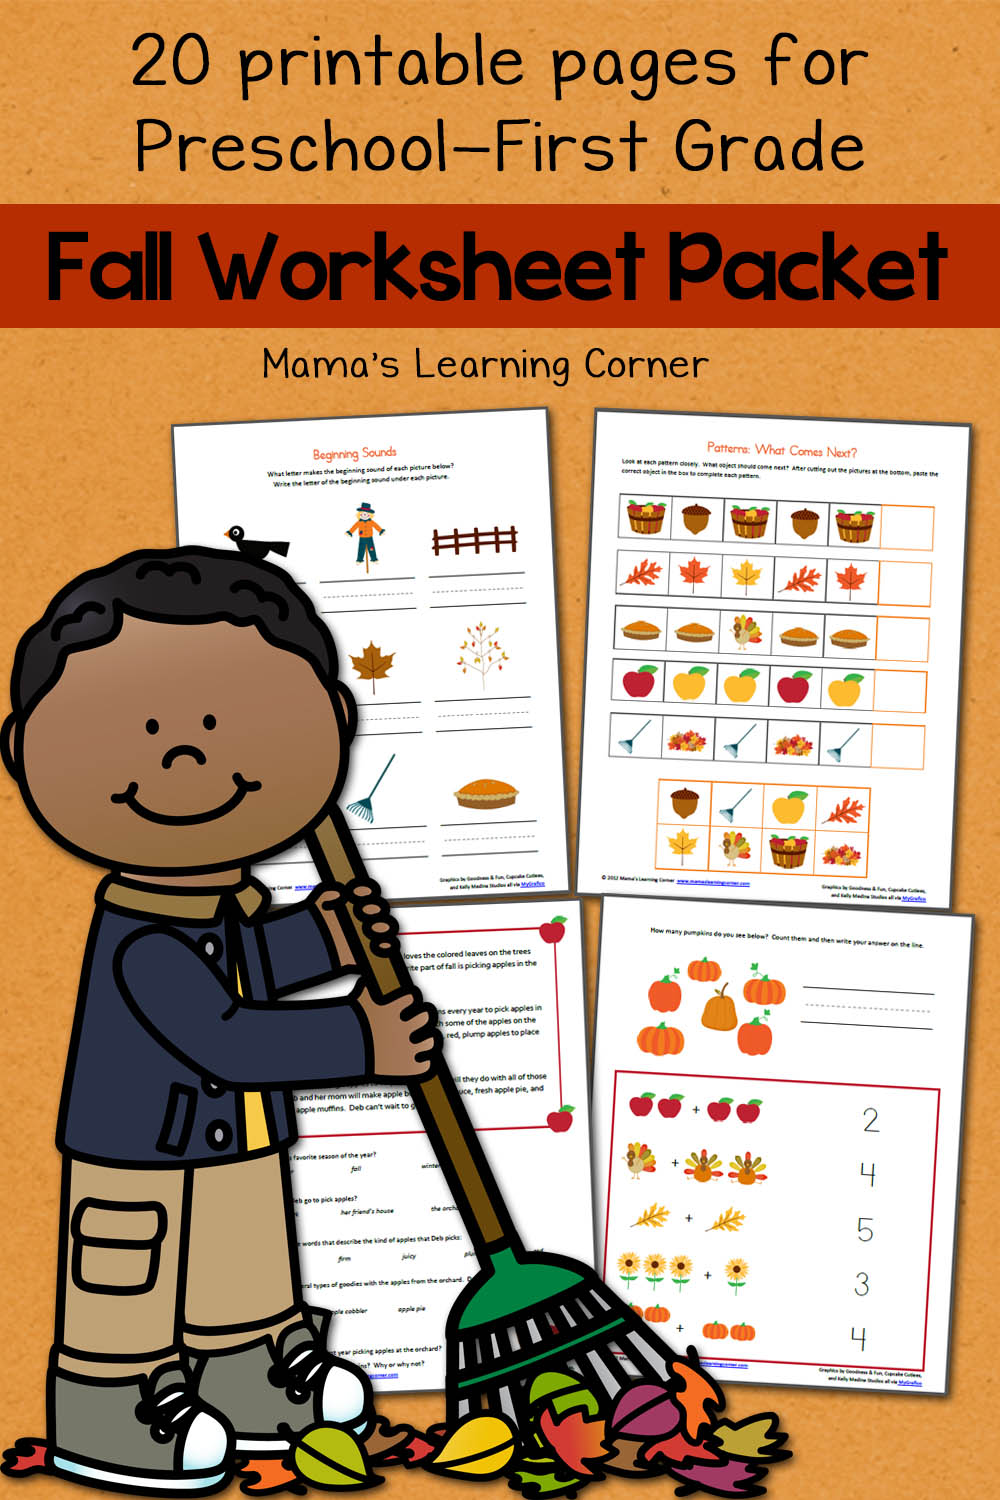 Fall Worksheet Packet for Preschool First Grade - Printable Pre Kindergarten Worksheets